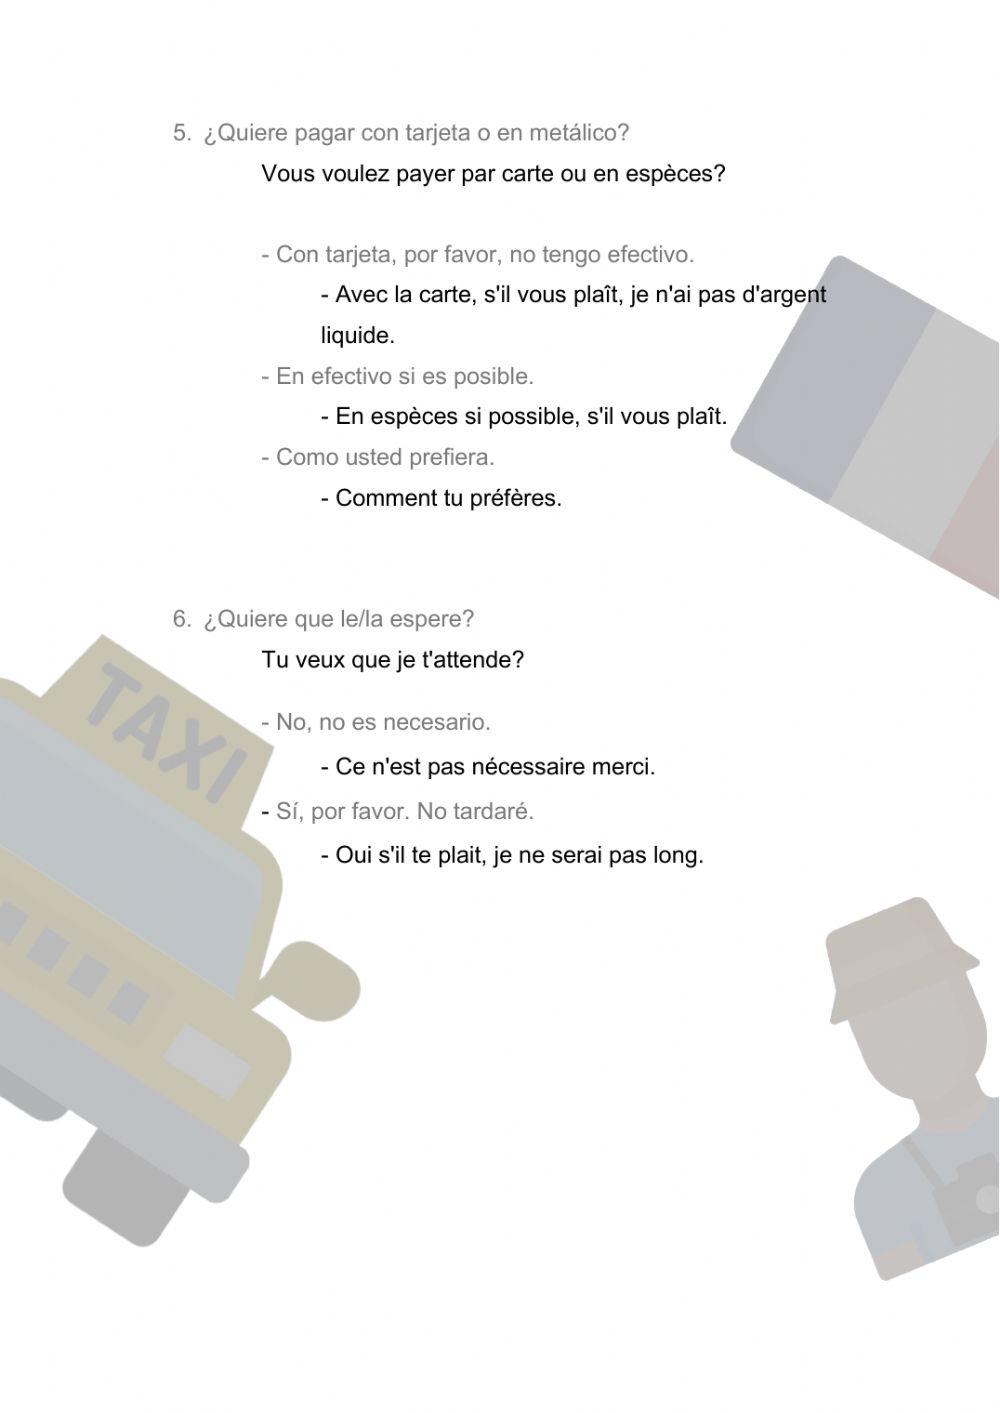 Algunas frases útiles en francés